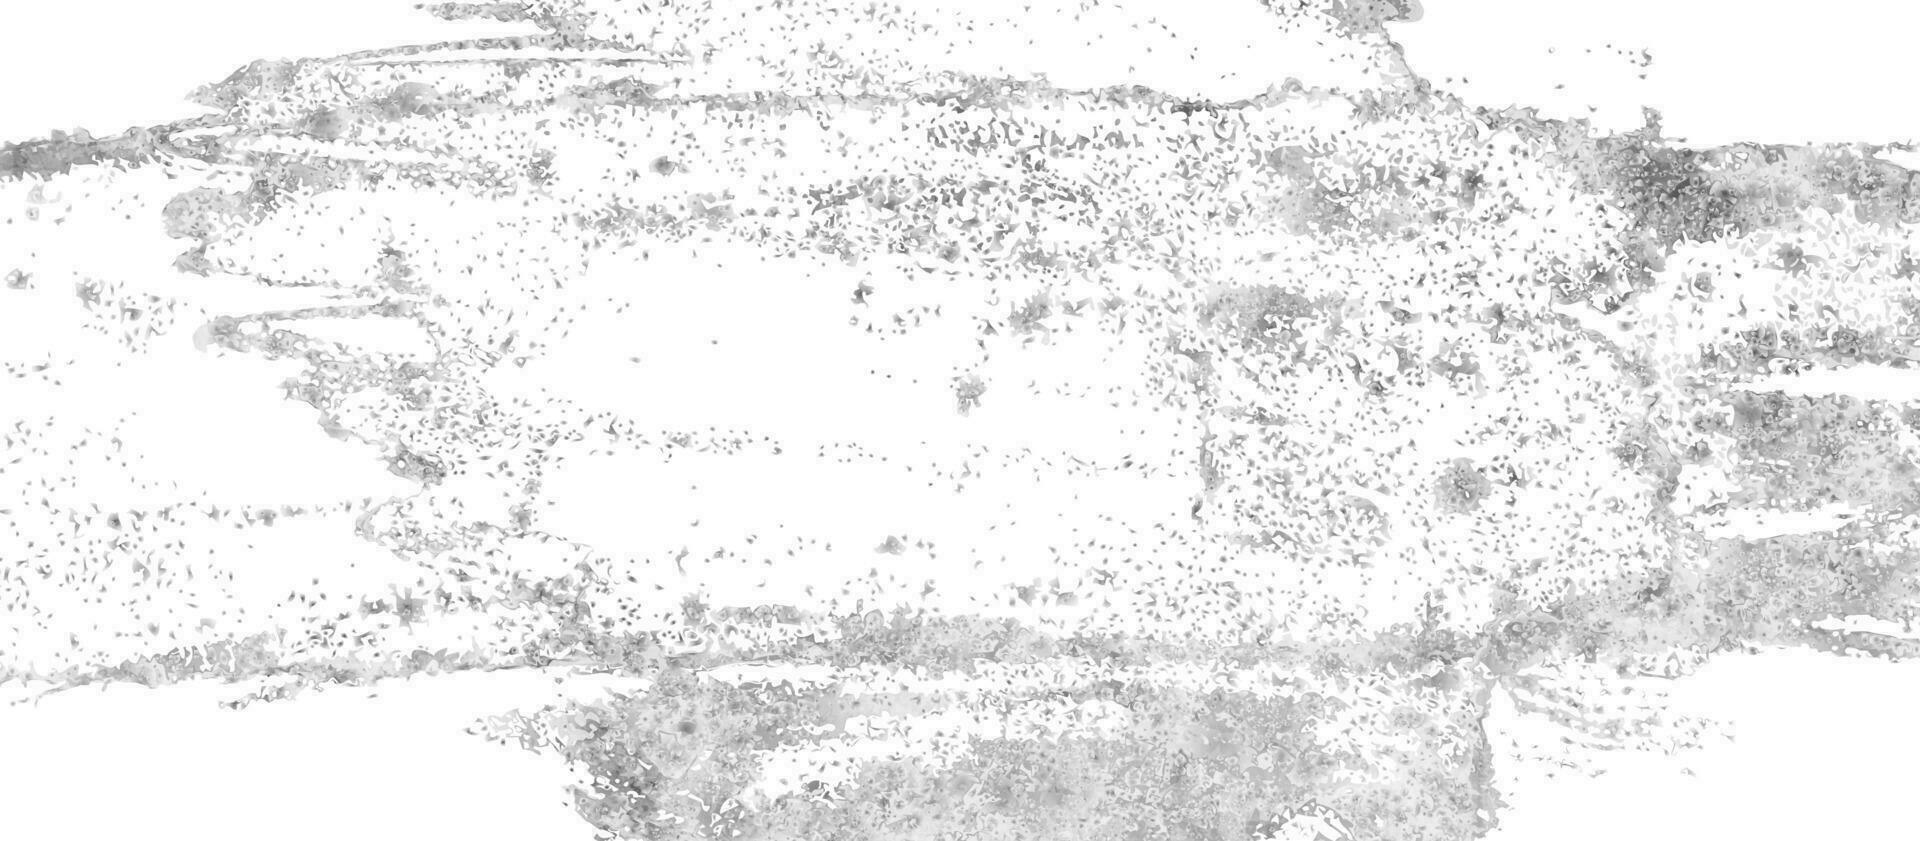 wit grijs inkt waterverf grunge abstract achtergrond vector